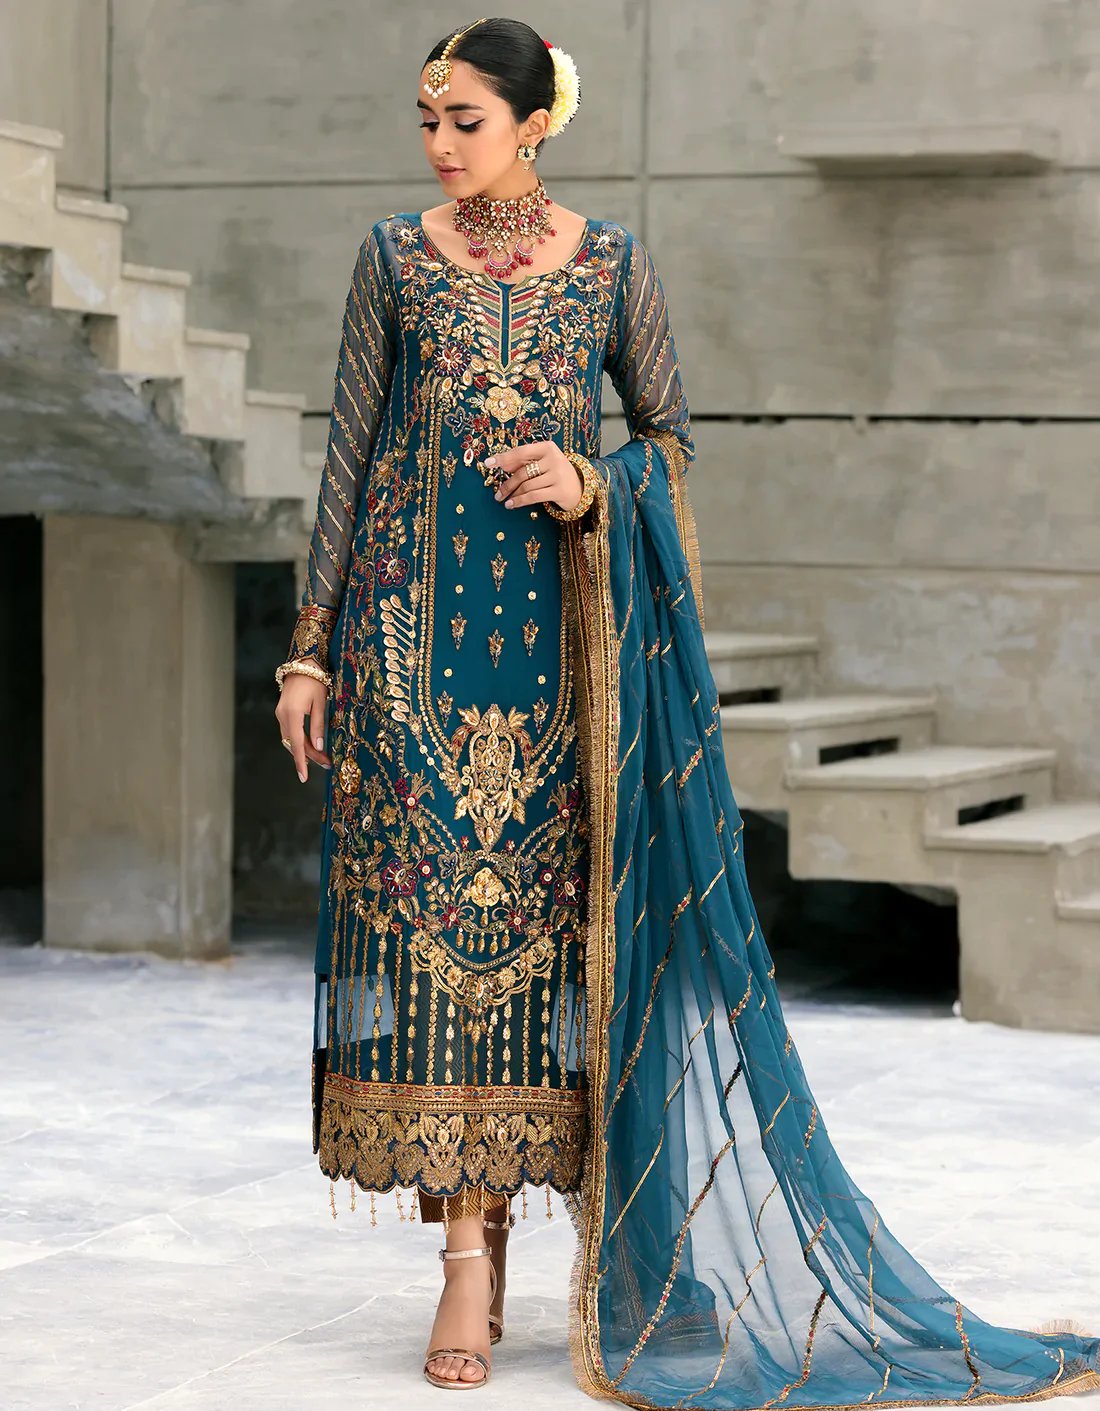 Emaan Adeel Belle Robe Formal Collection Chiffon Replica